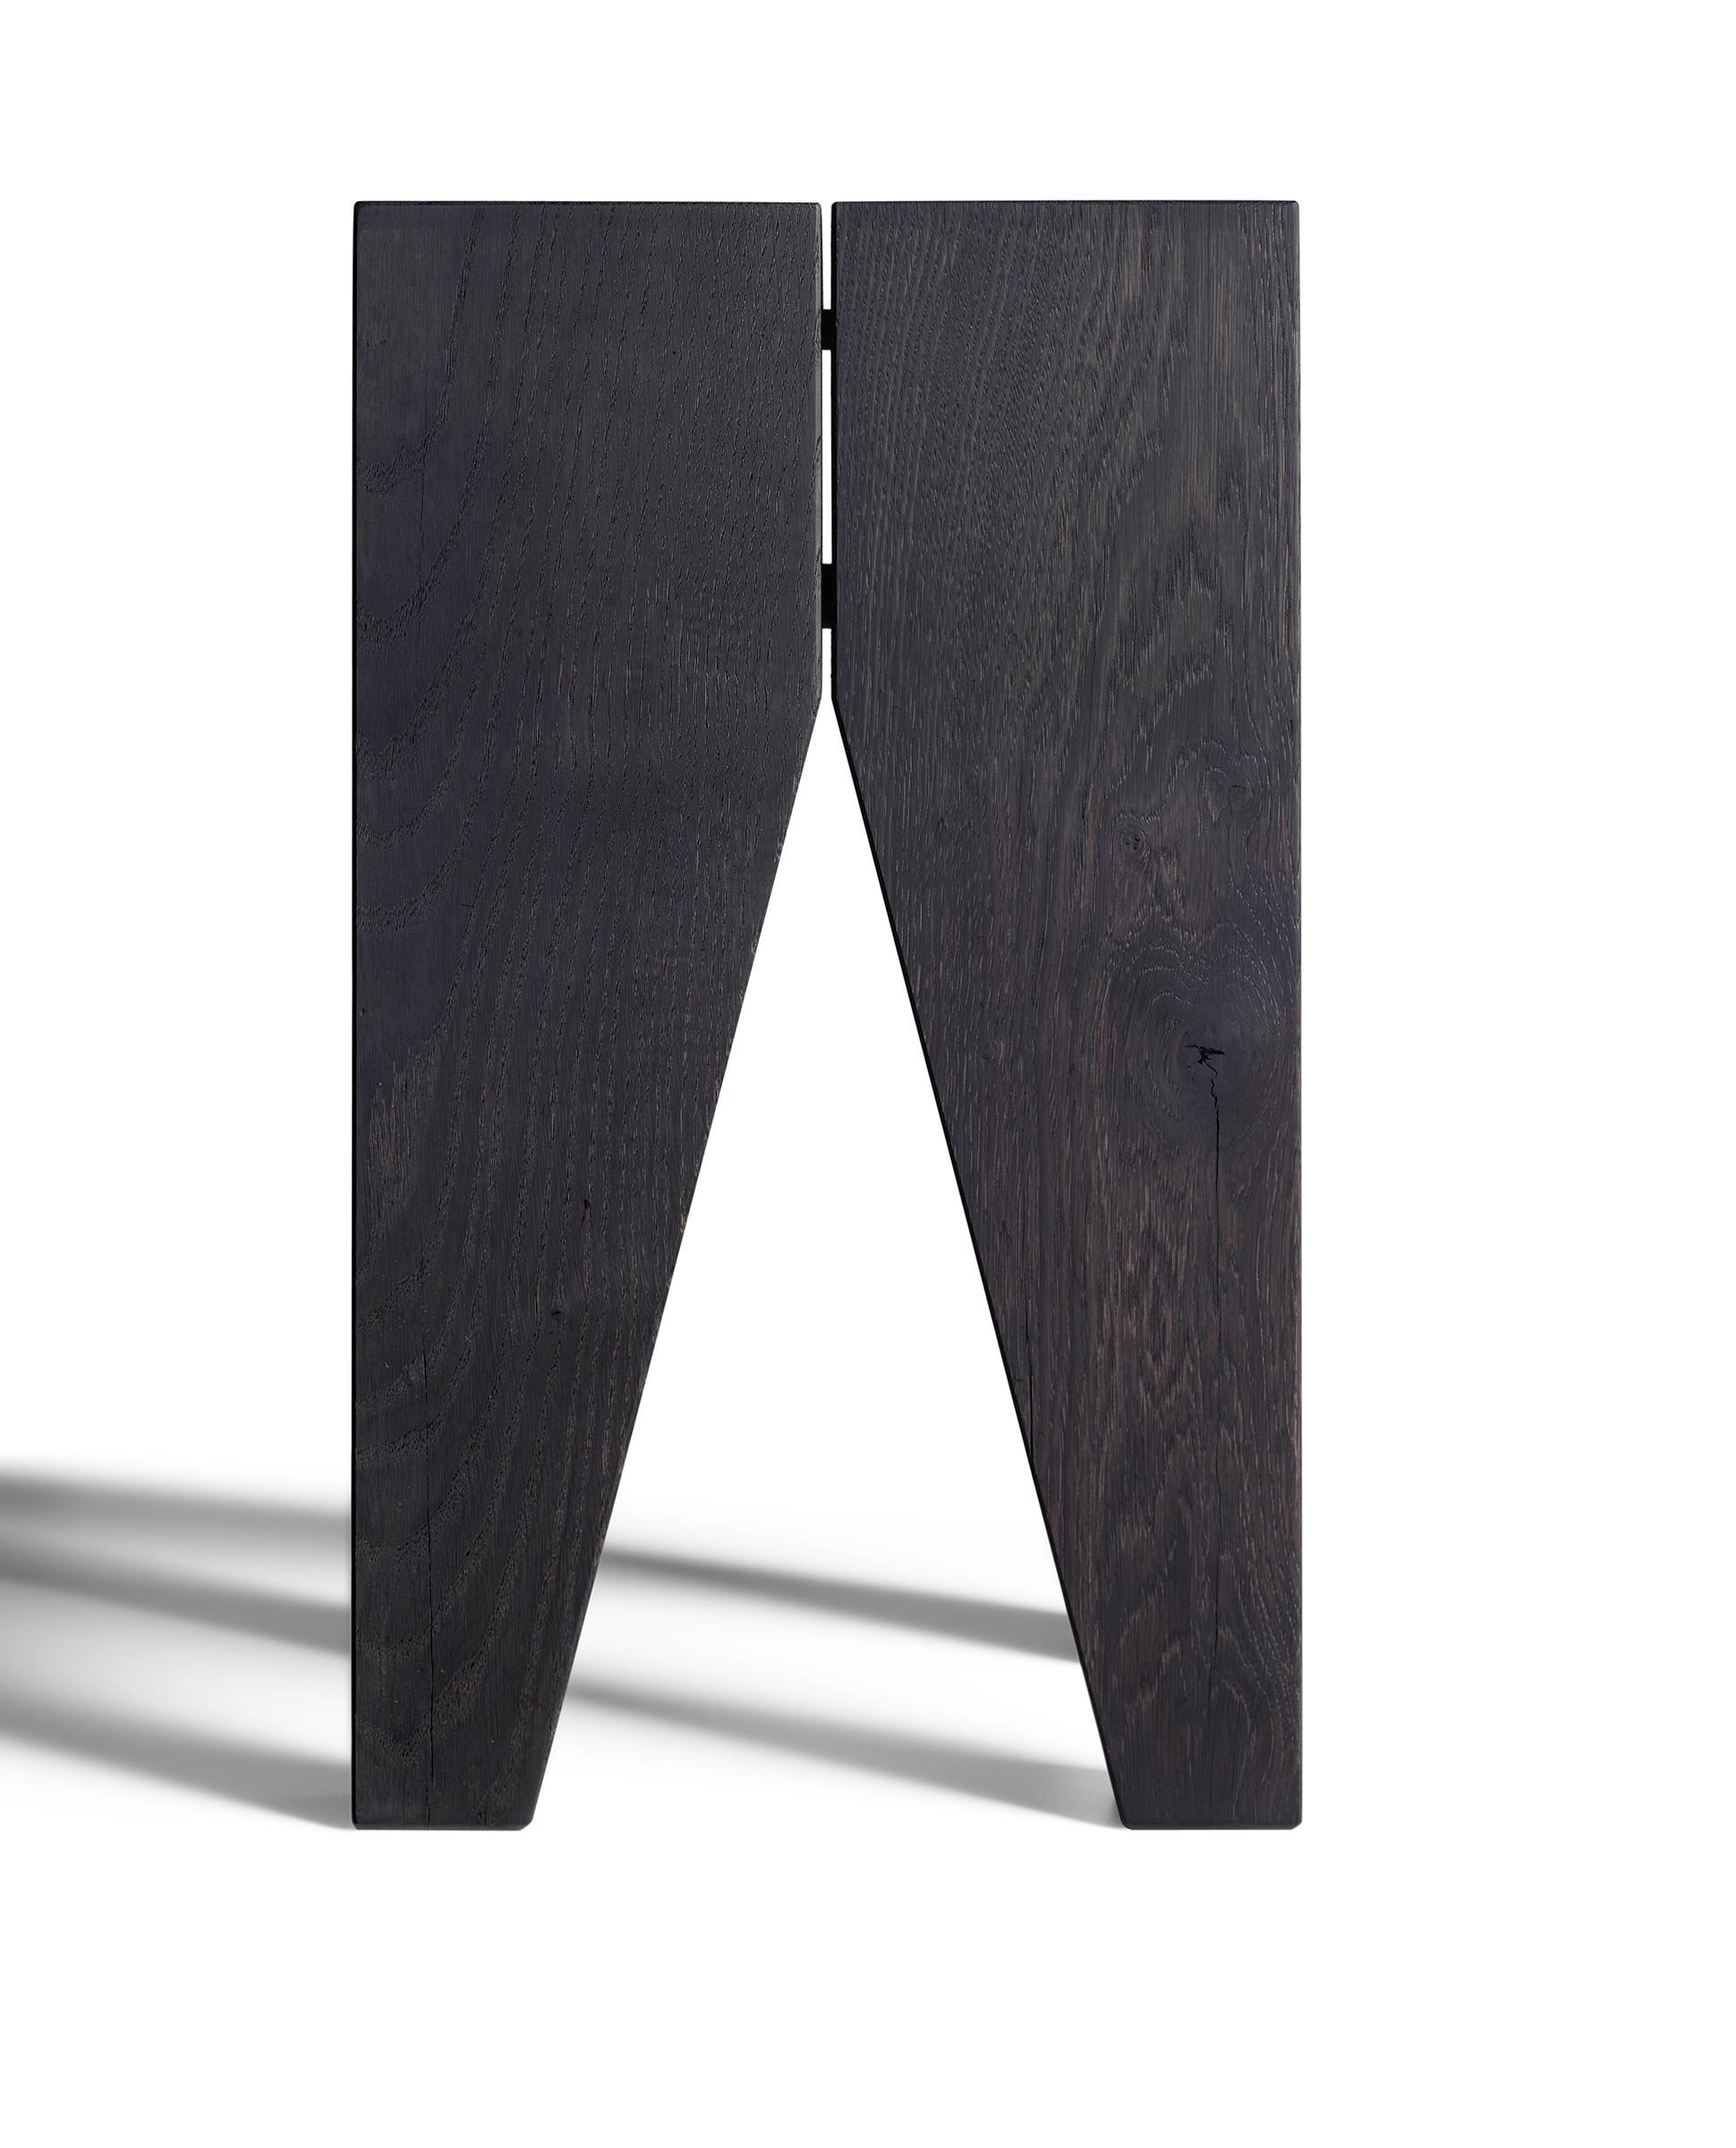 Chêne Table d'appoint en chêne noir Philipp Mainzer Backenzahn pour E15 en vente